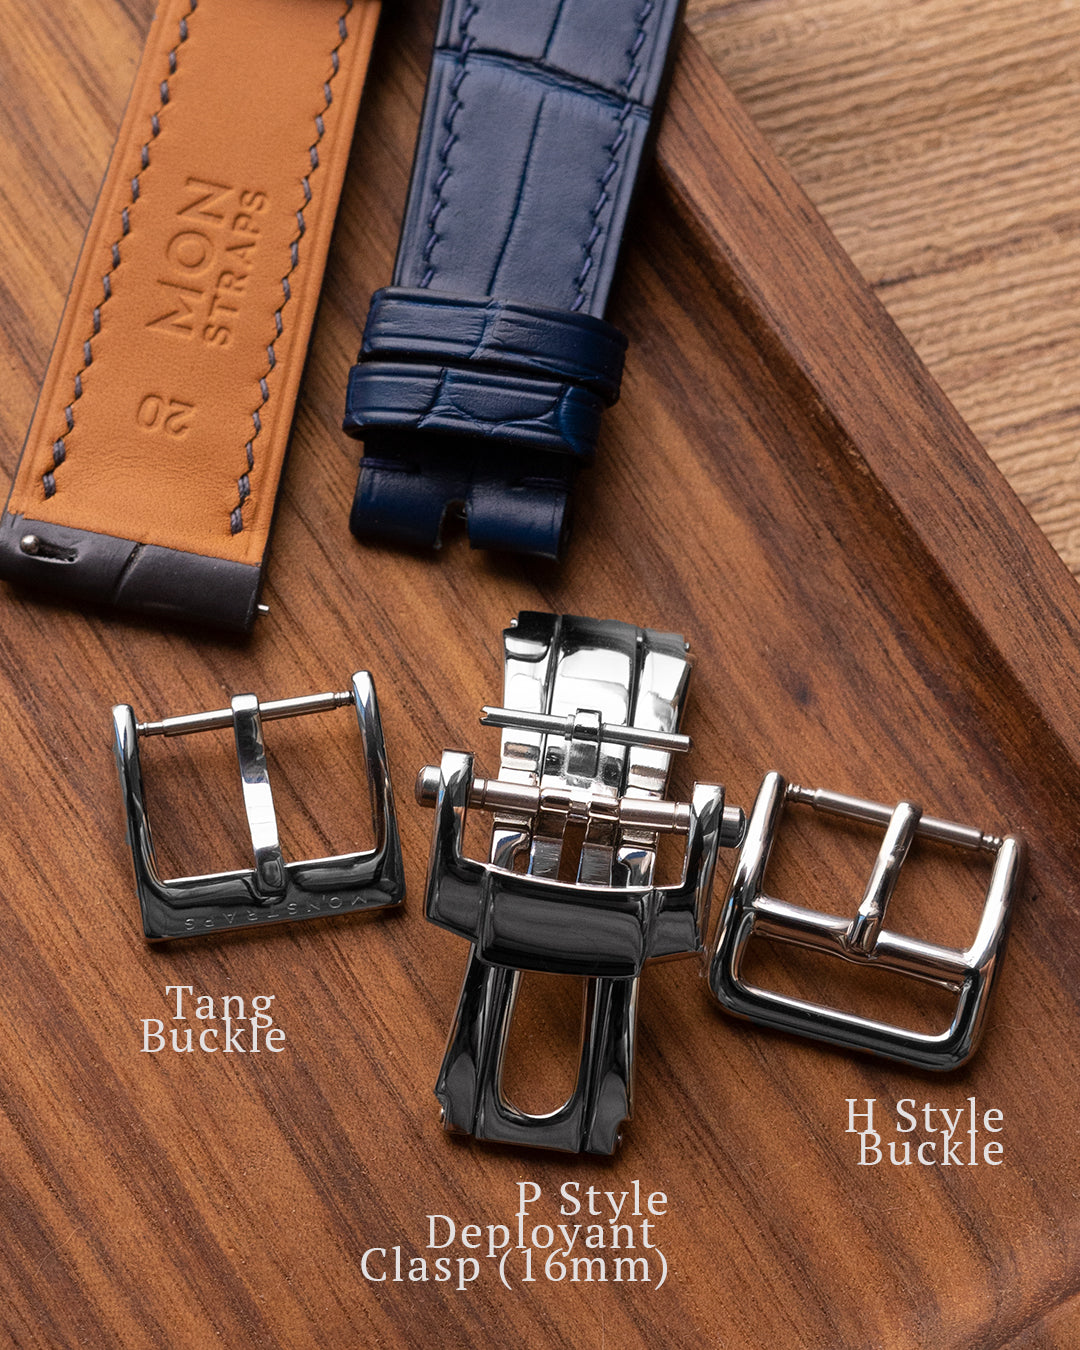 Cognac Brown Leather Watch Strap handmade Watch Band 16mm 